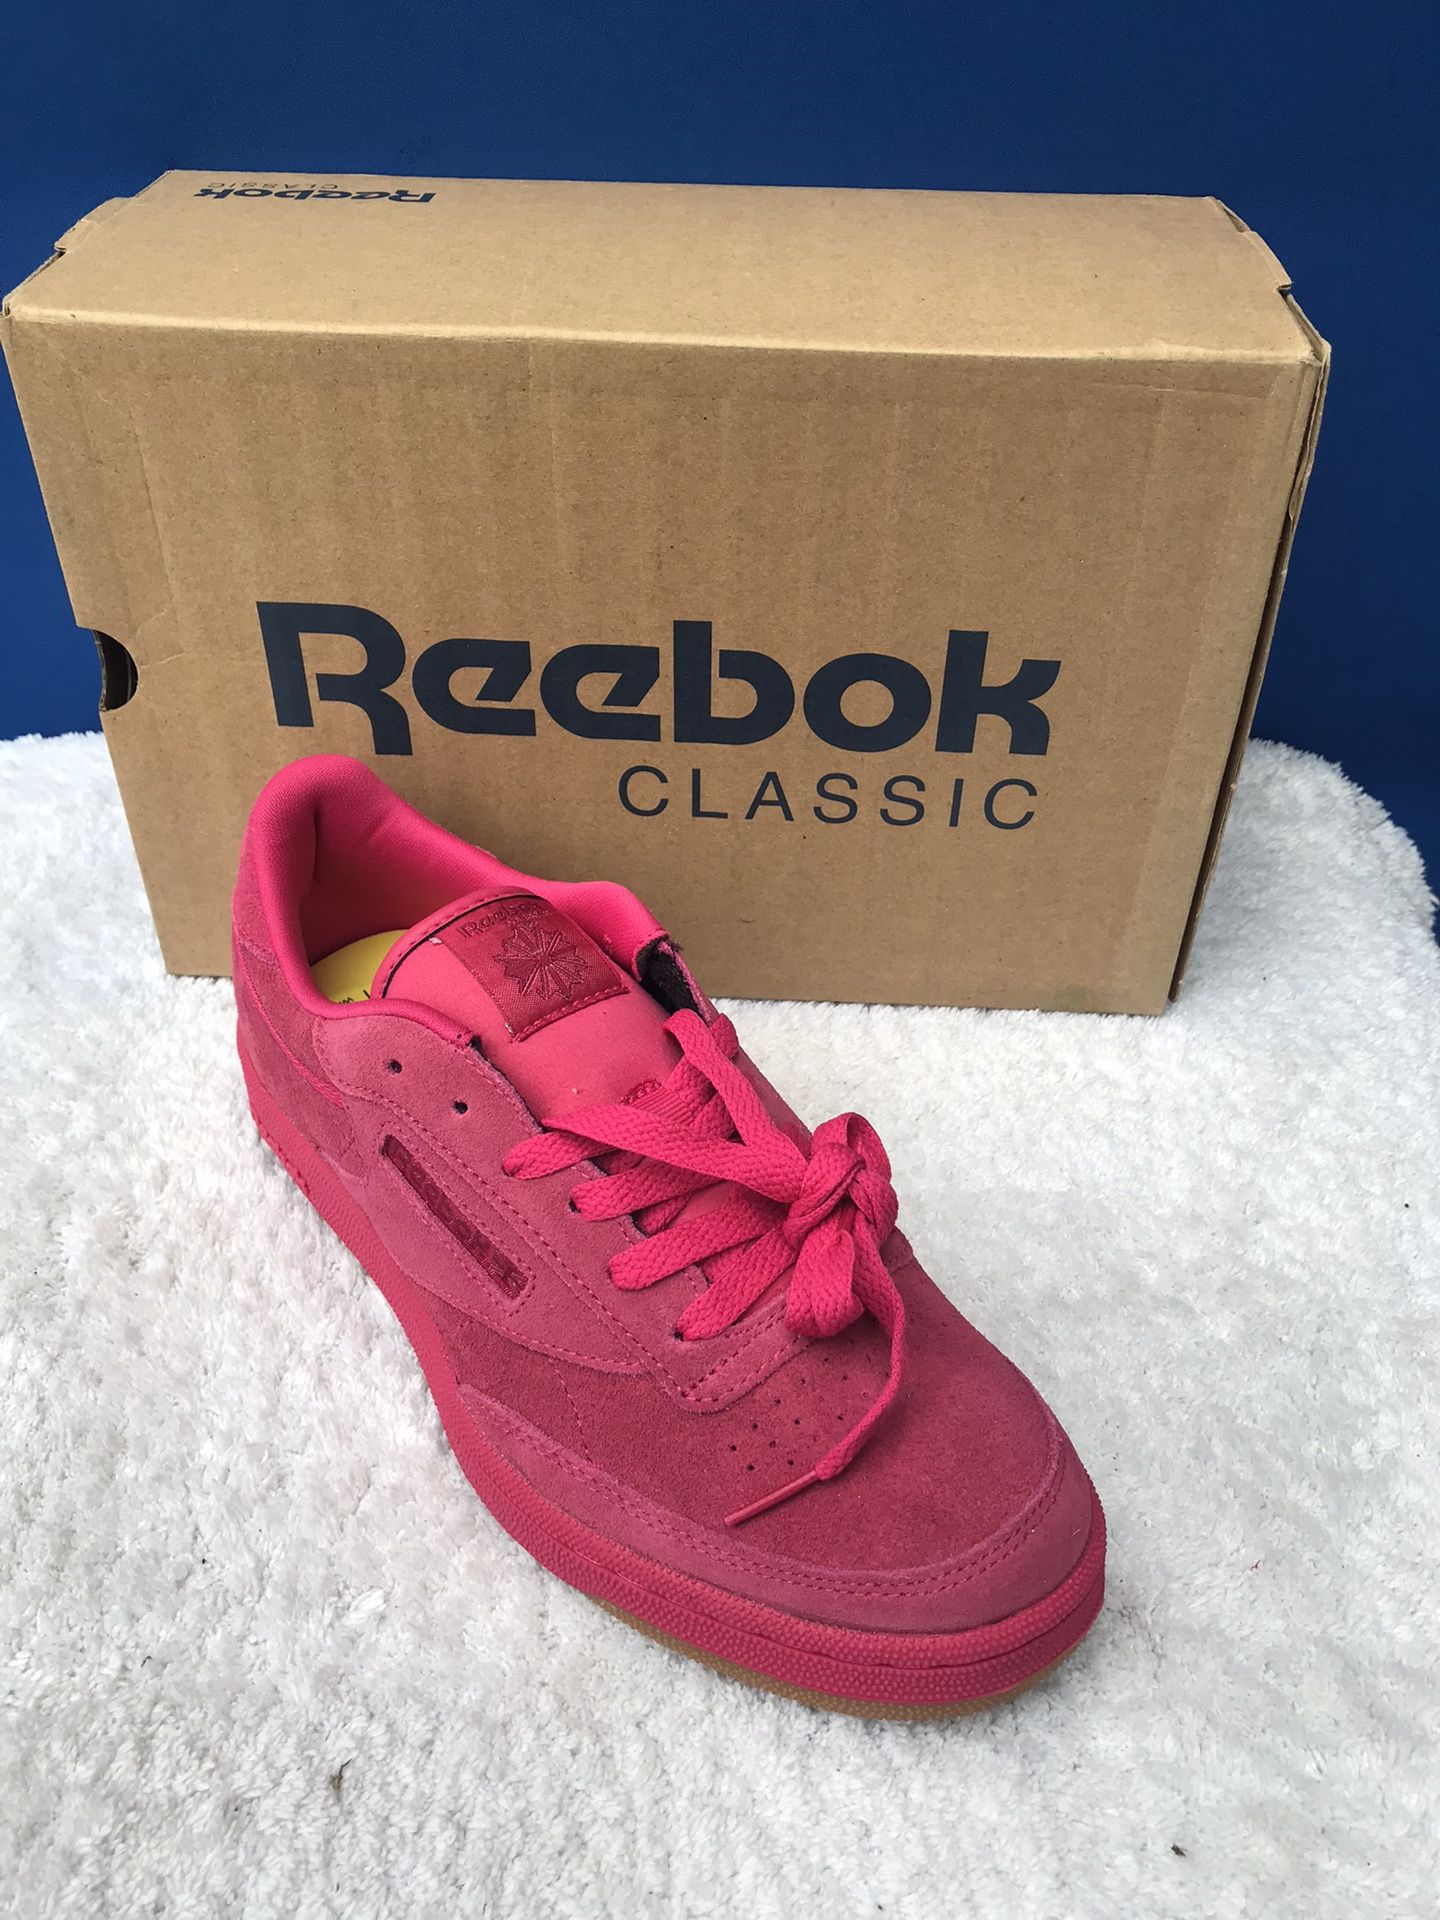 Reebok Ortholite Classic Pink Suede Athletic Sneakers